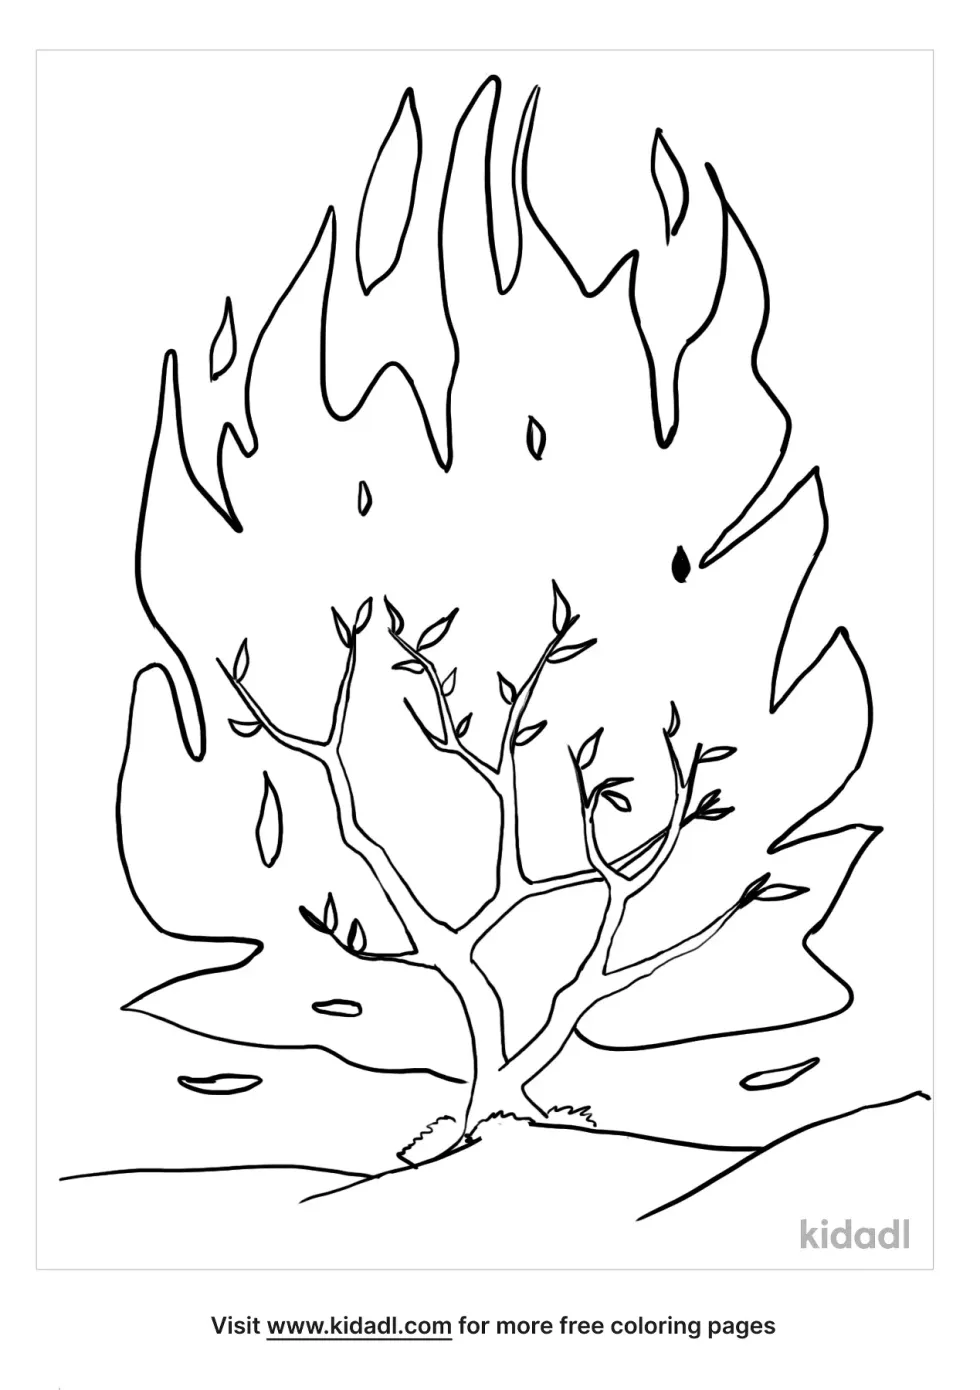 Burning Bush Coloring Page